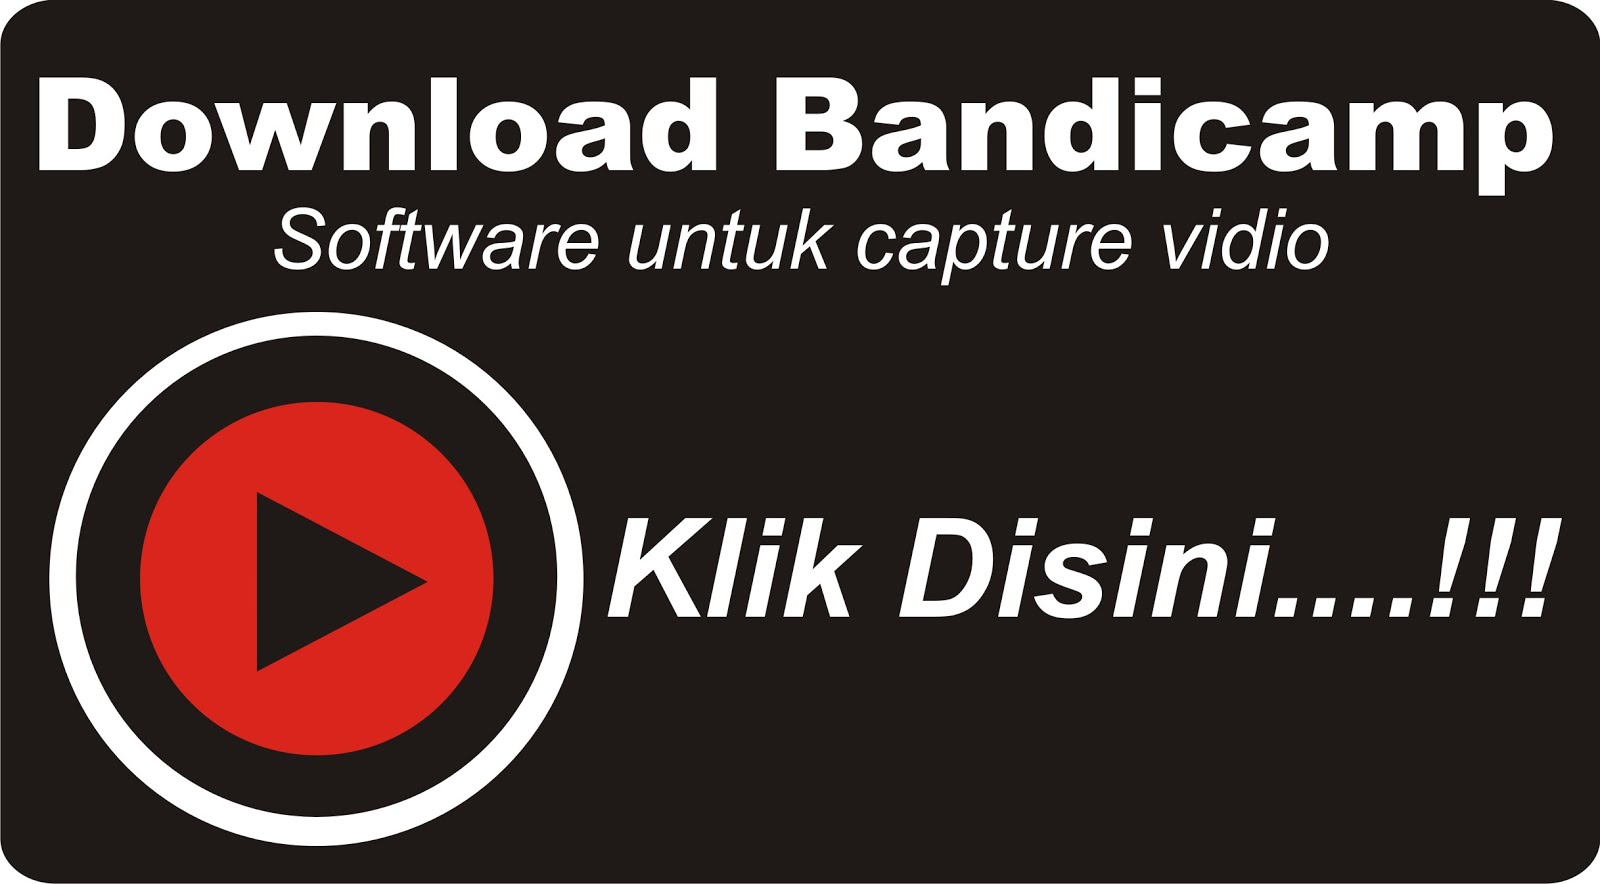 Download Bandicamp